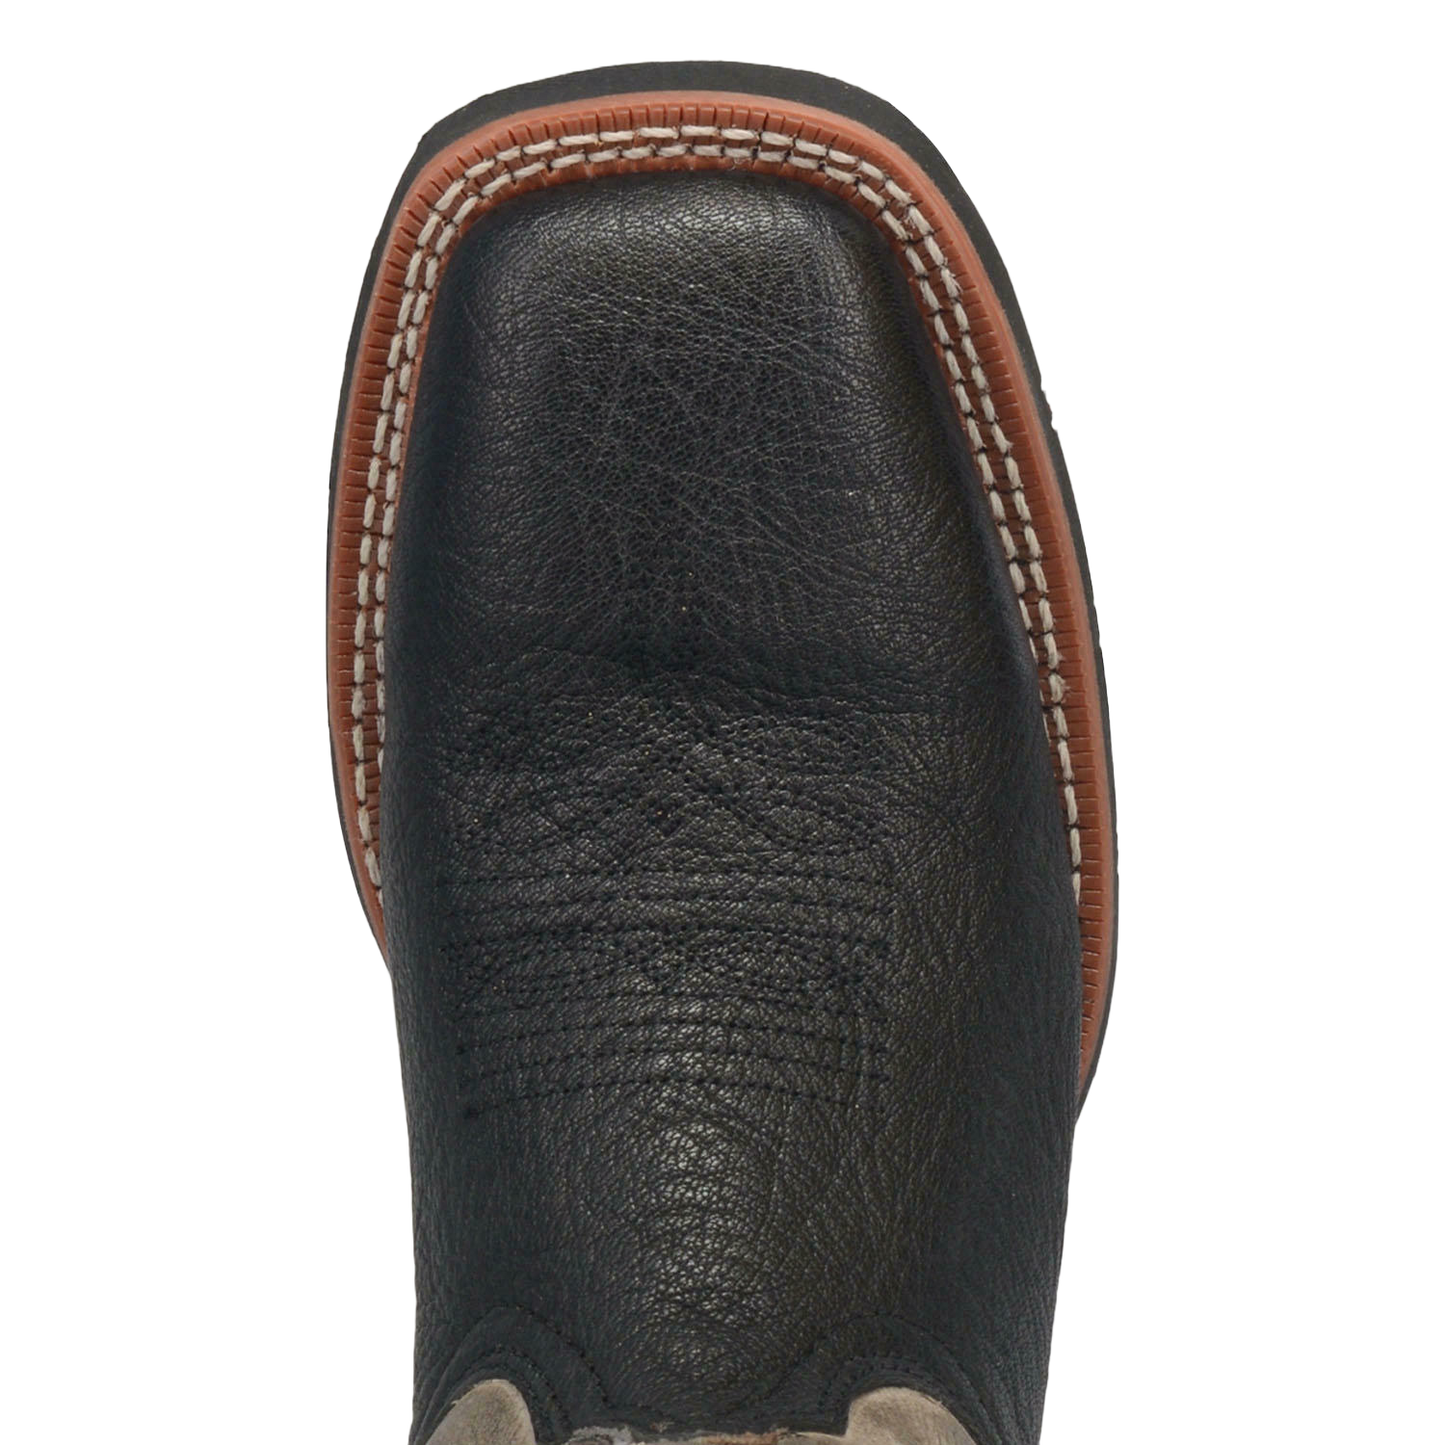 Laredo Men's Isaac Black & Grey Leather Boots 7910